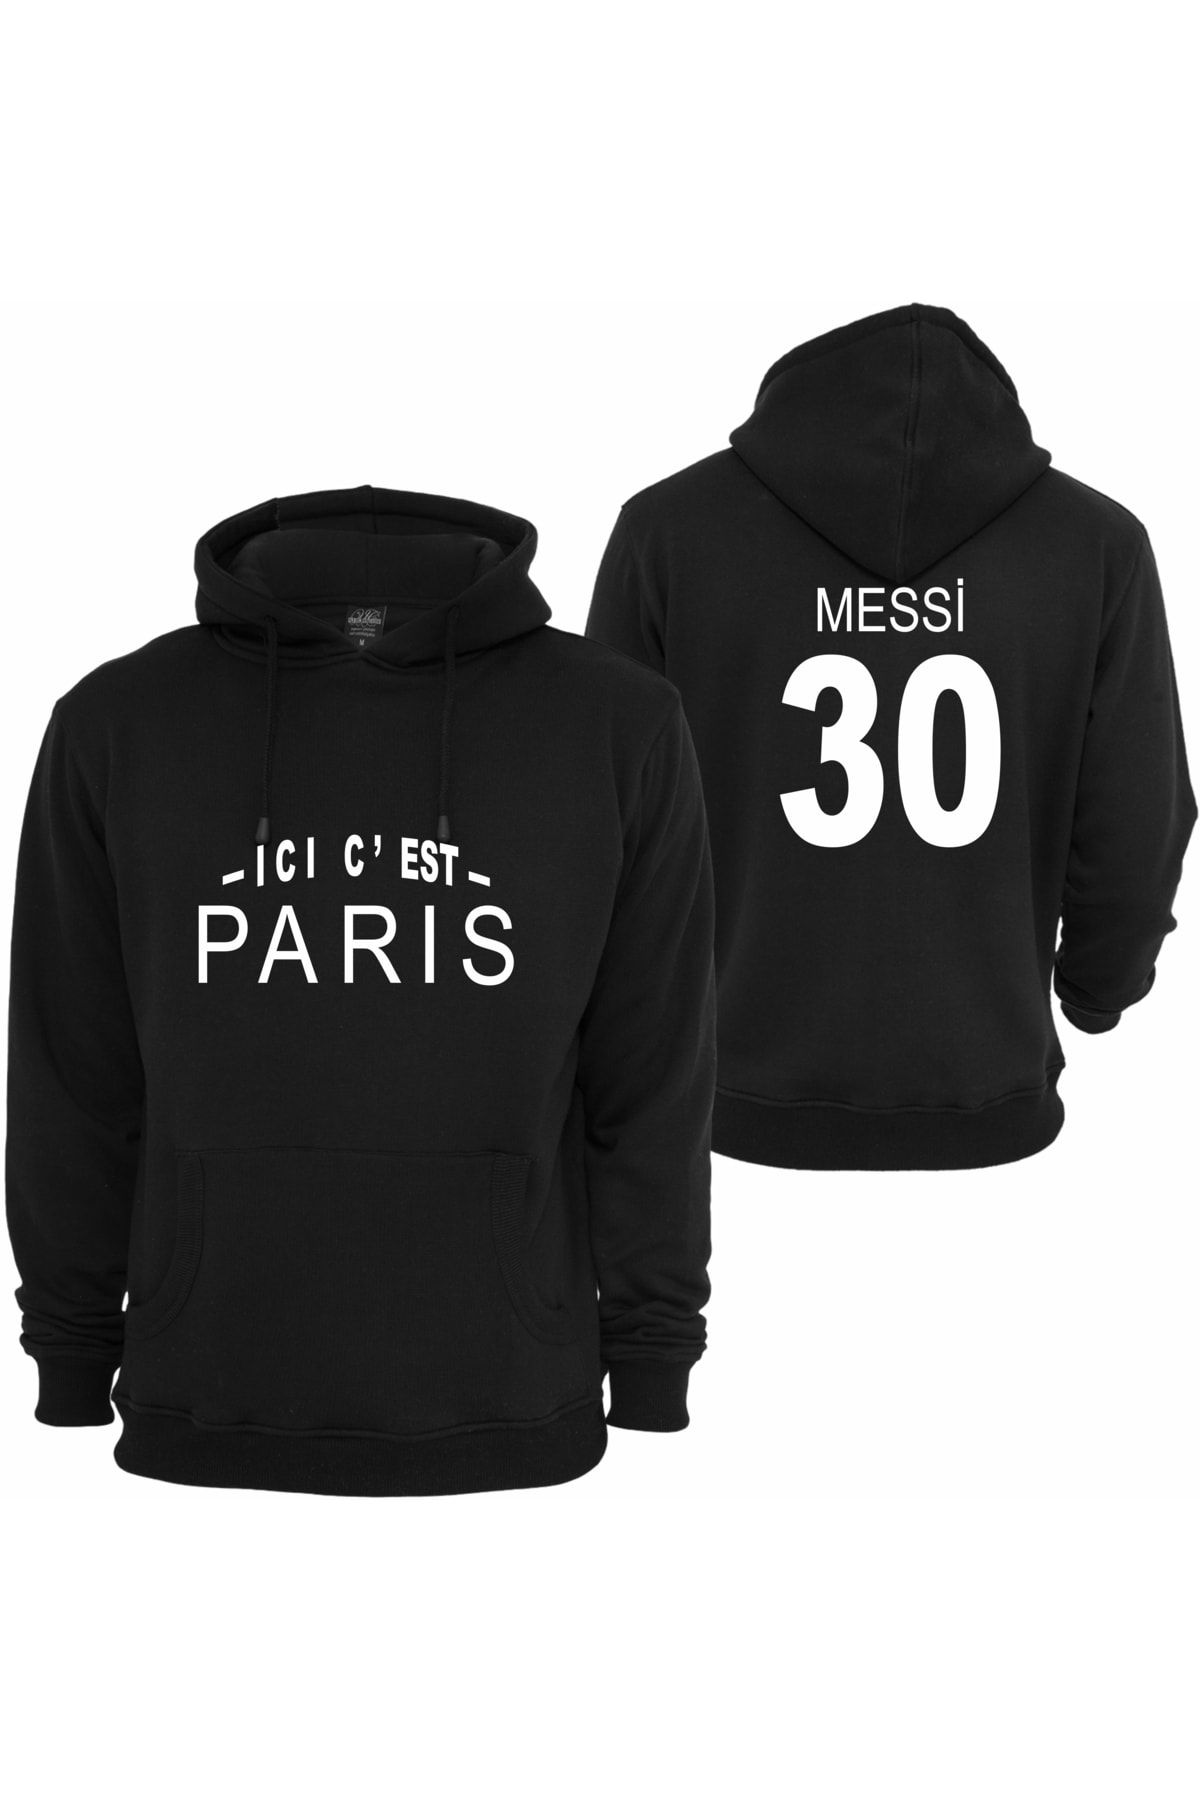 venüsdijital Paris Messi 30 Tasarım Unisex Siyah Hoodie